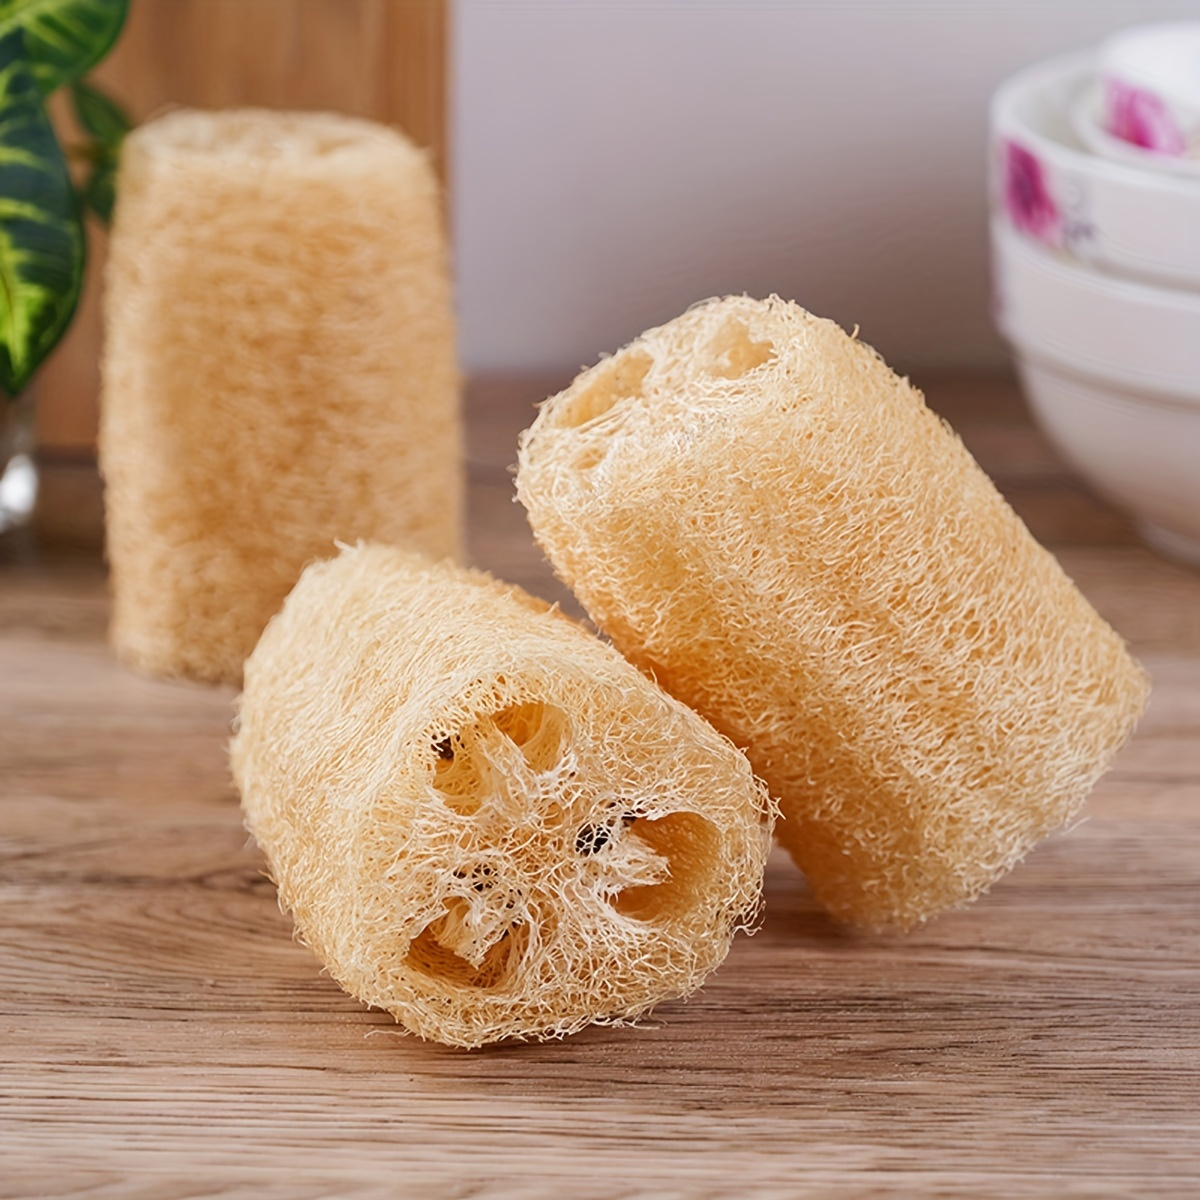 RV Esponja de lufa 6 piezas (7,5 cm de largo y 4-6 cm de diámetro), esponja  natural para lavar platos, esponja de lufa para fregar, esponja para